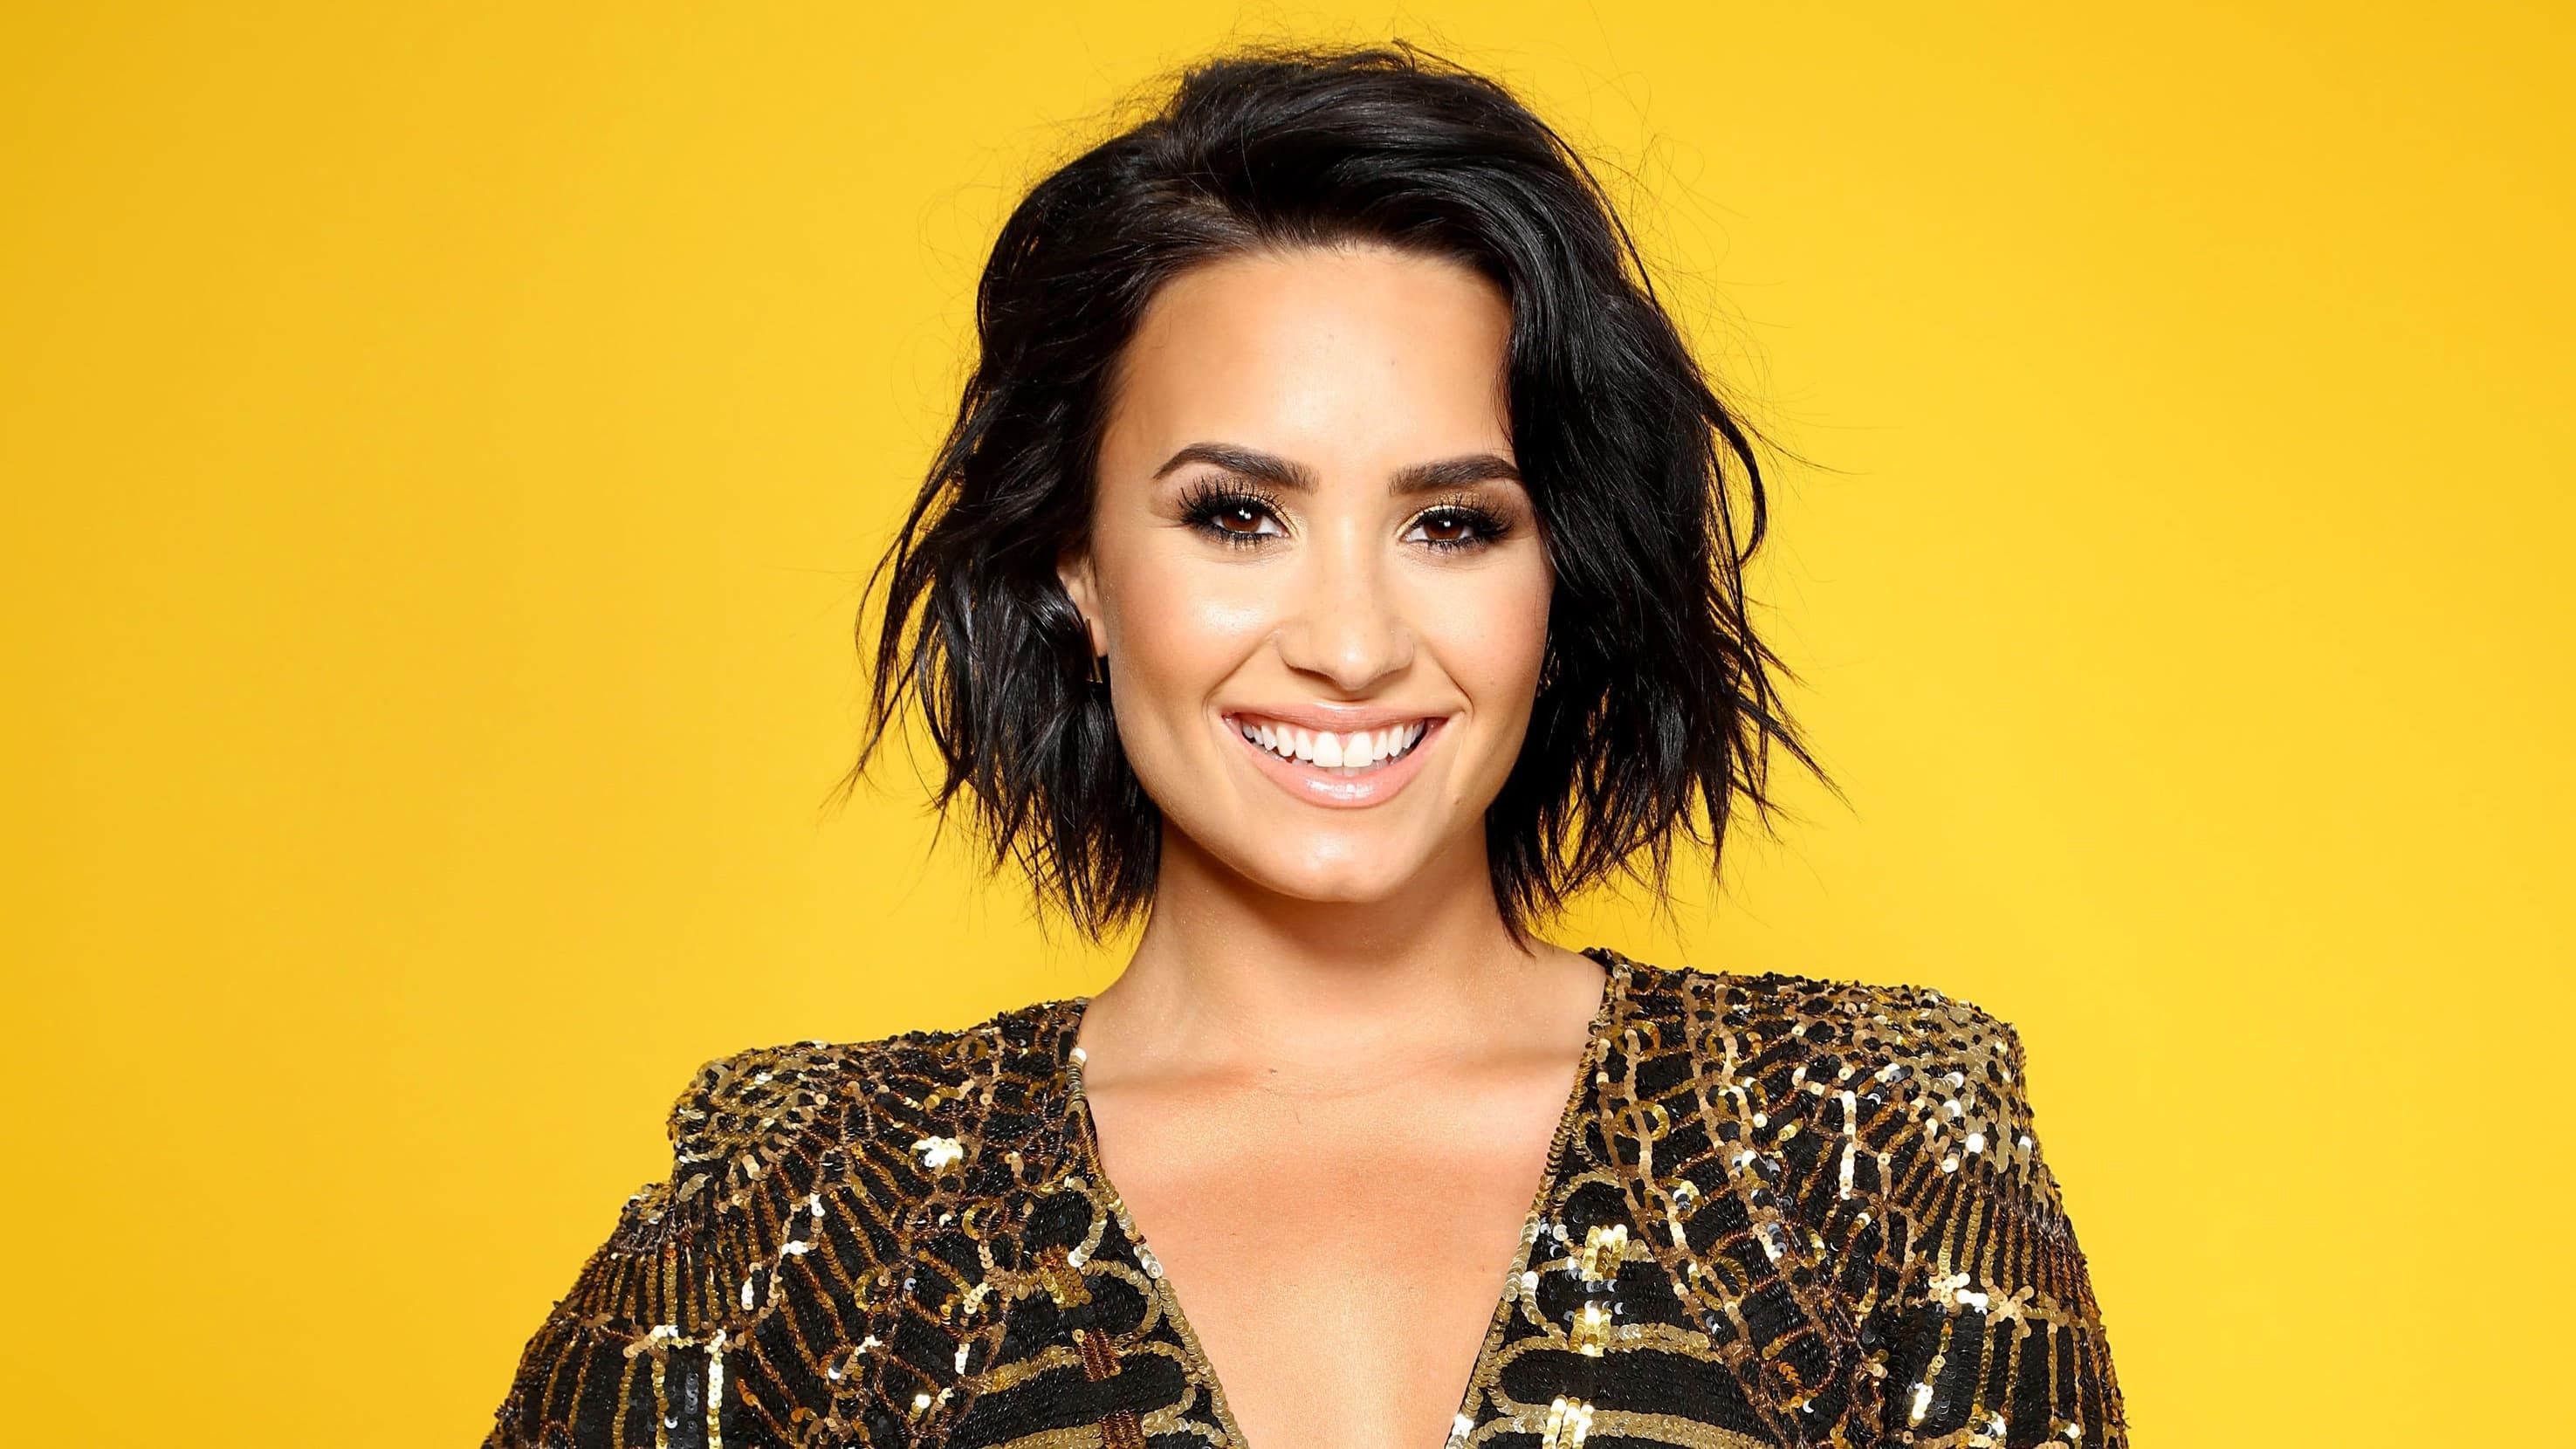 Demi Lovato Portrait 2018 Wallpapers